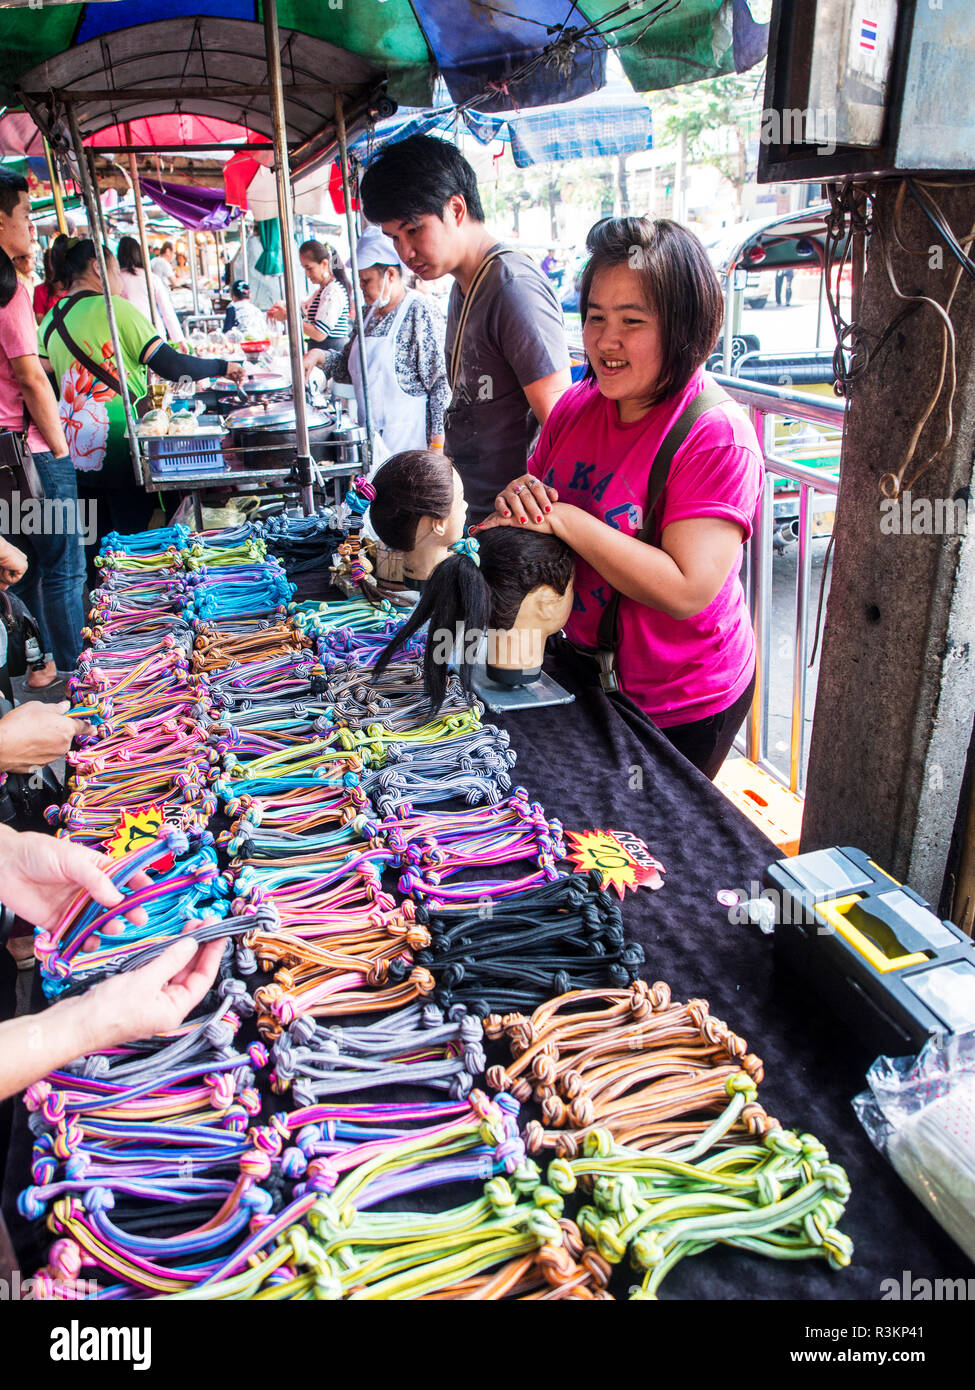 Thailand, Bangkok, Bangkok, Market, Sidewalk vendor of hair ties Stock Photo